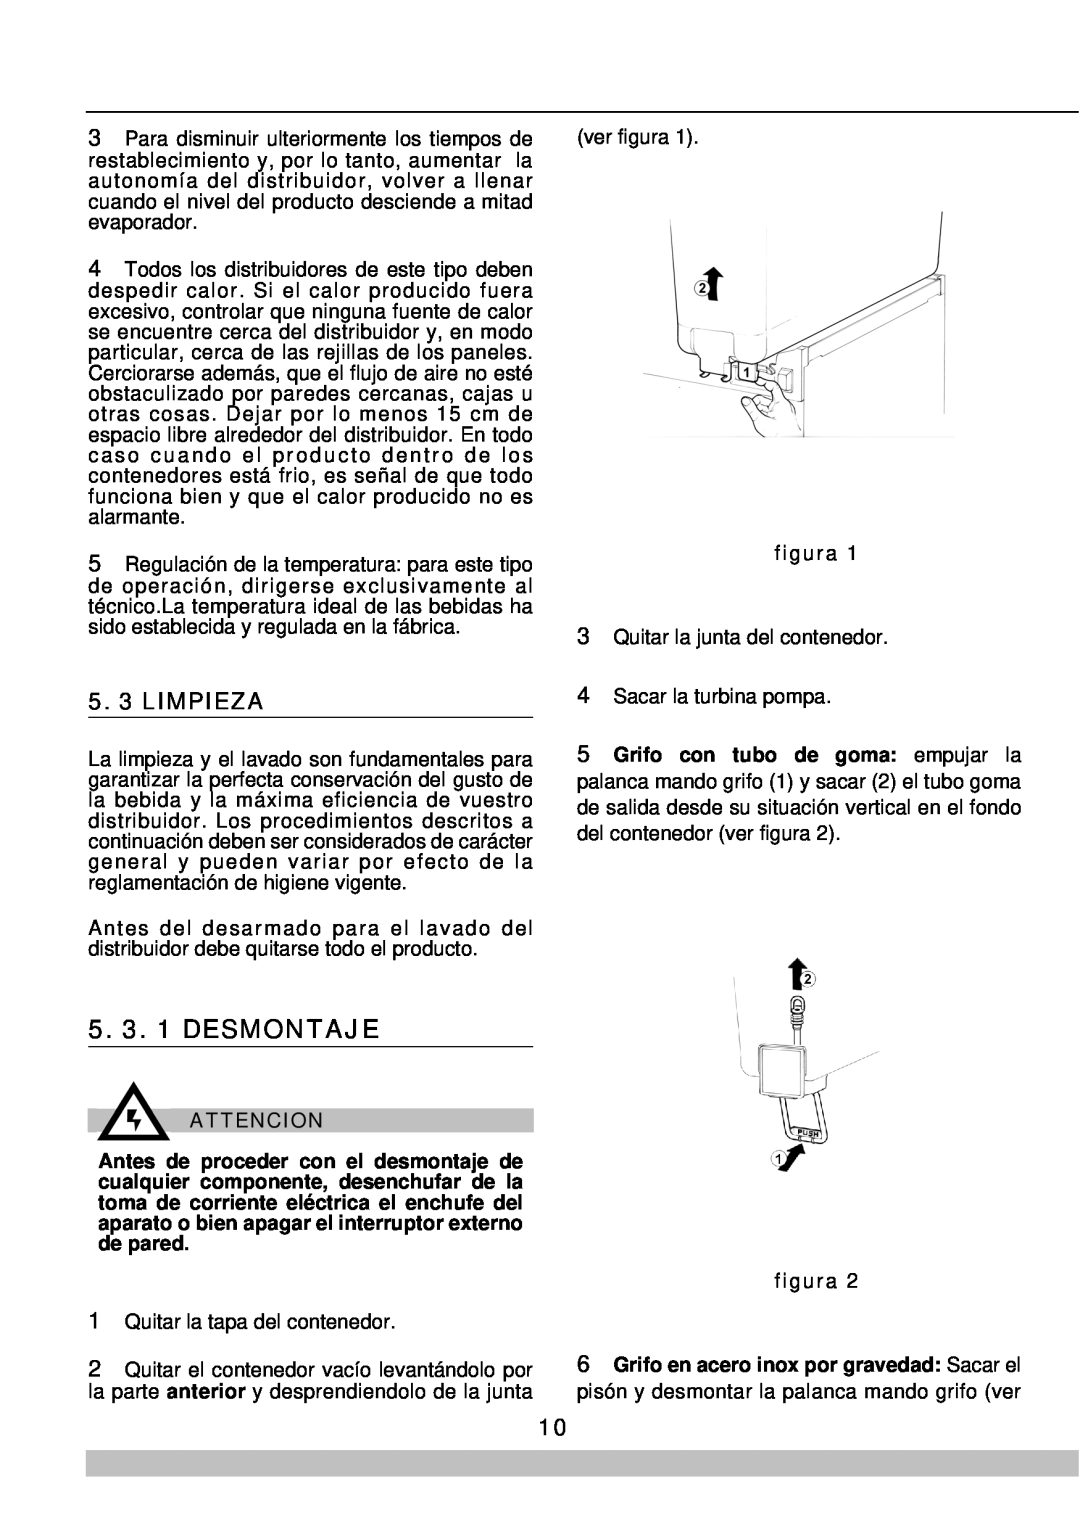 Cecilware 8/1, 8/4 manual 5. 3. 1 DESMONTAJE, 5. 3 LIMPIEZA, figura, Attencion 